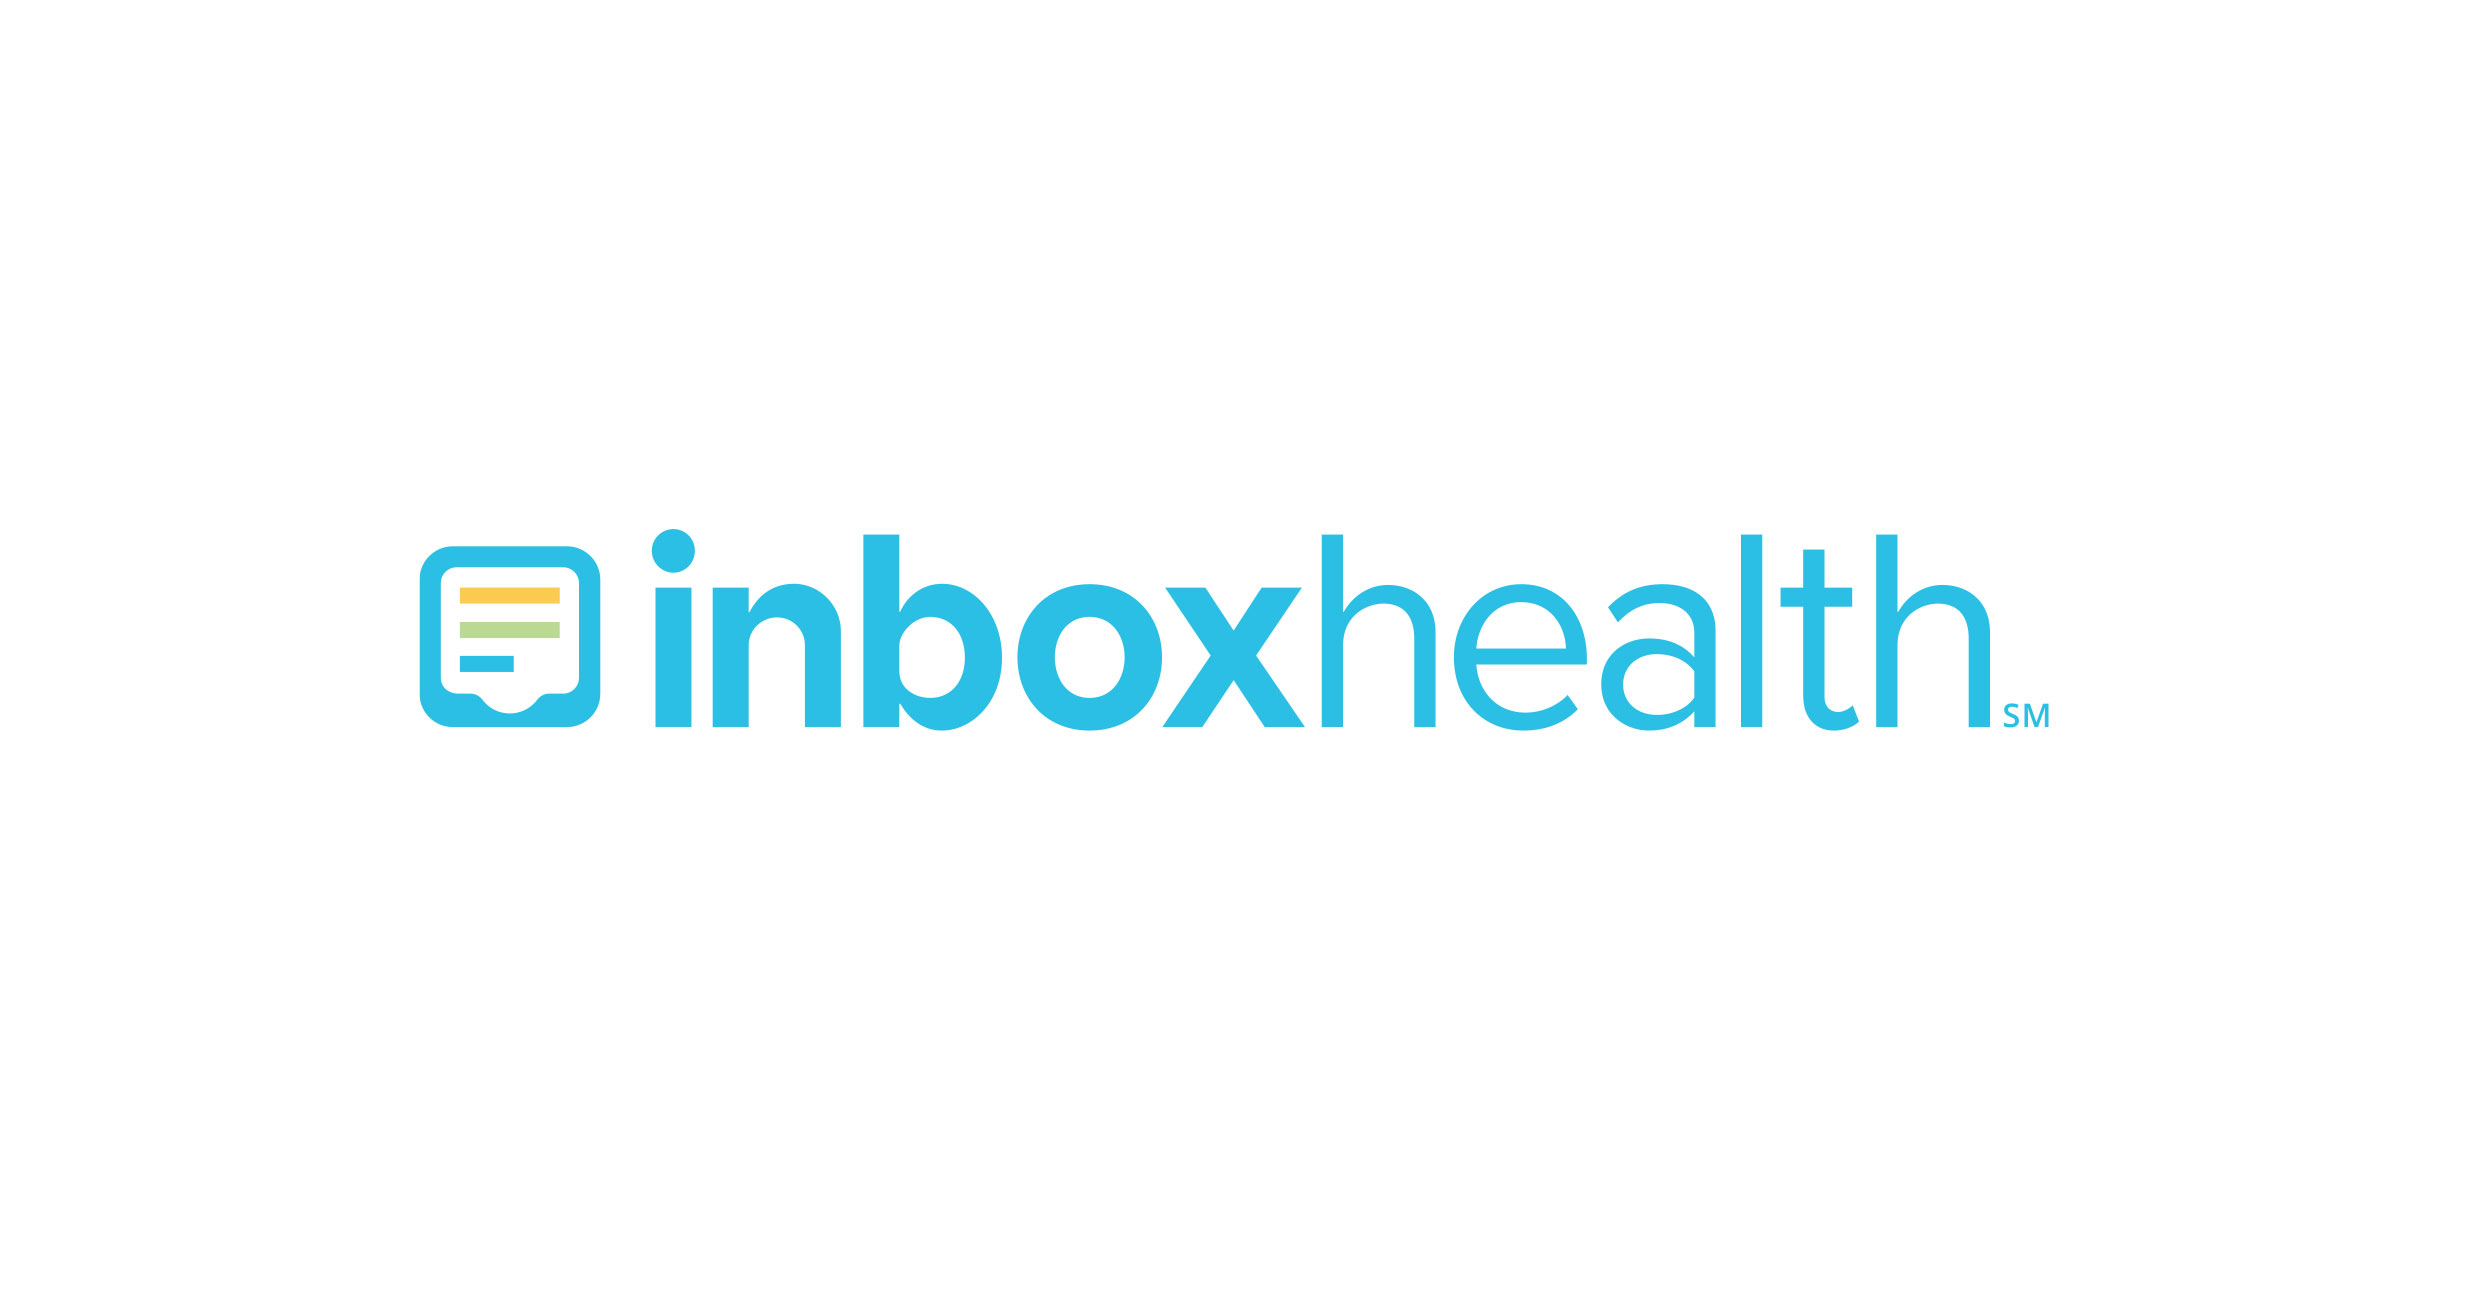 inbox health logo design